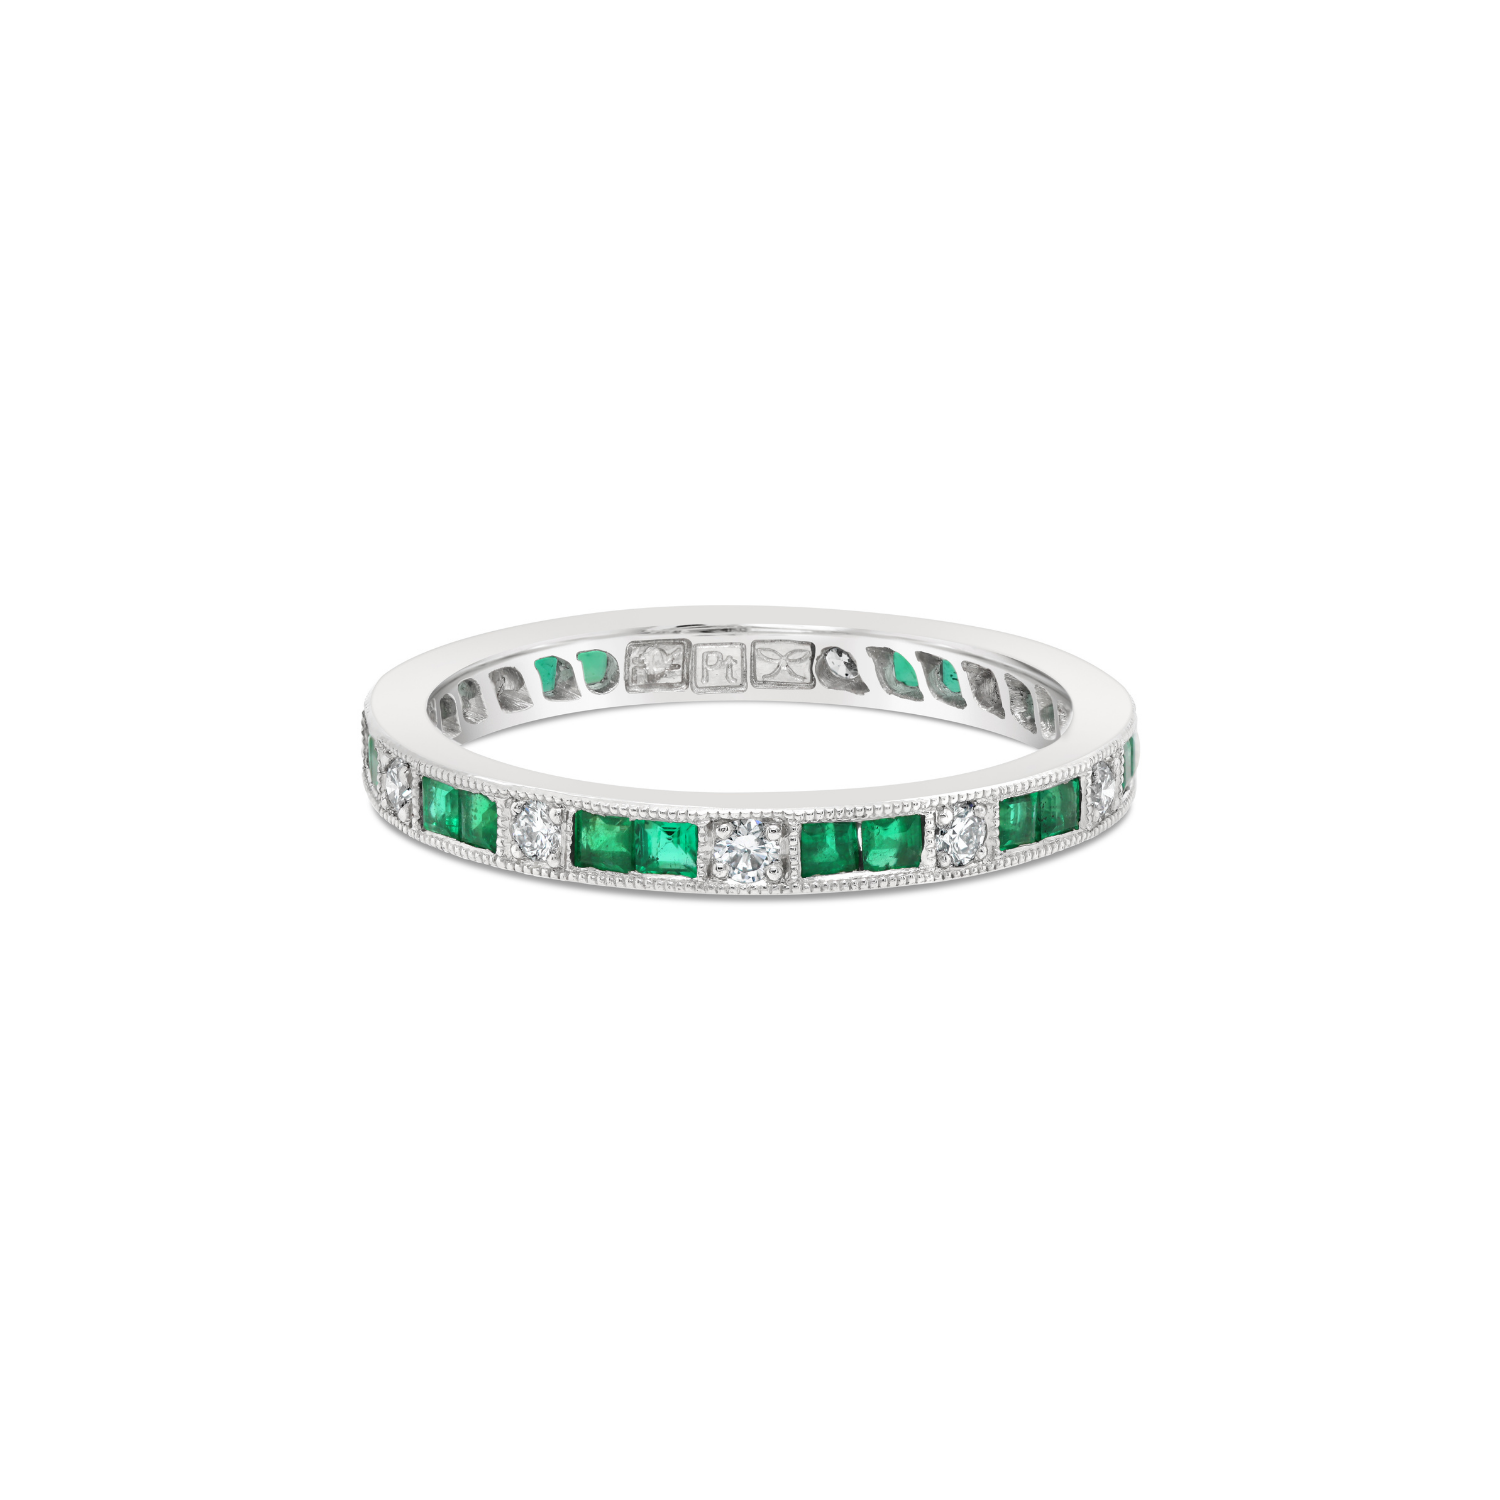 Emerald and diamond band